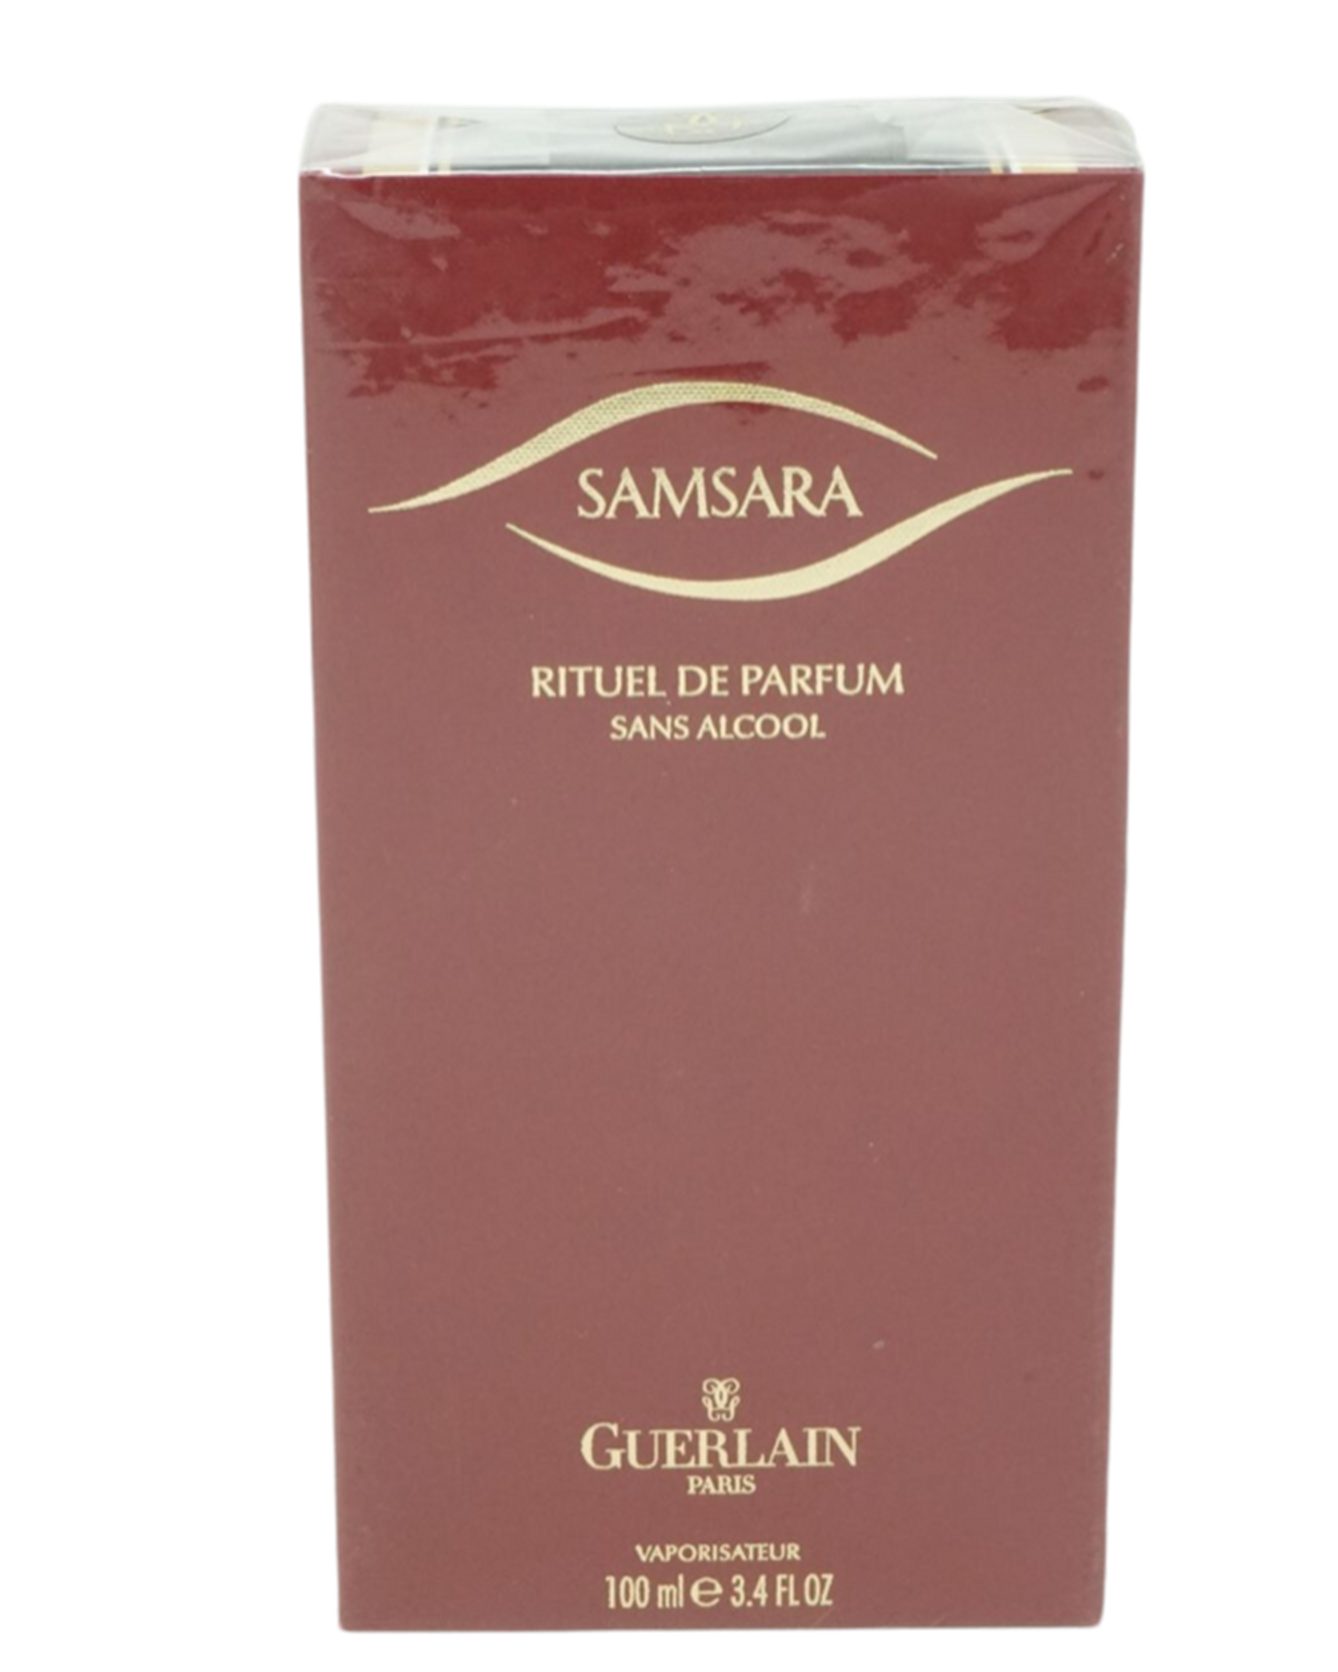 Toilette Spray Parfum Guerlain de de 100ml Eau GUERLAIN Rituel Samsara